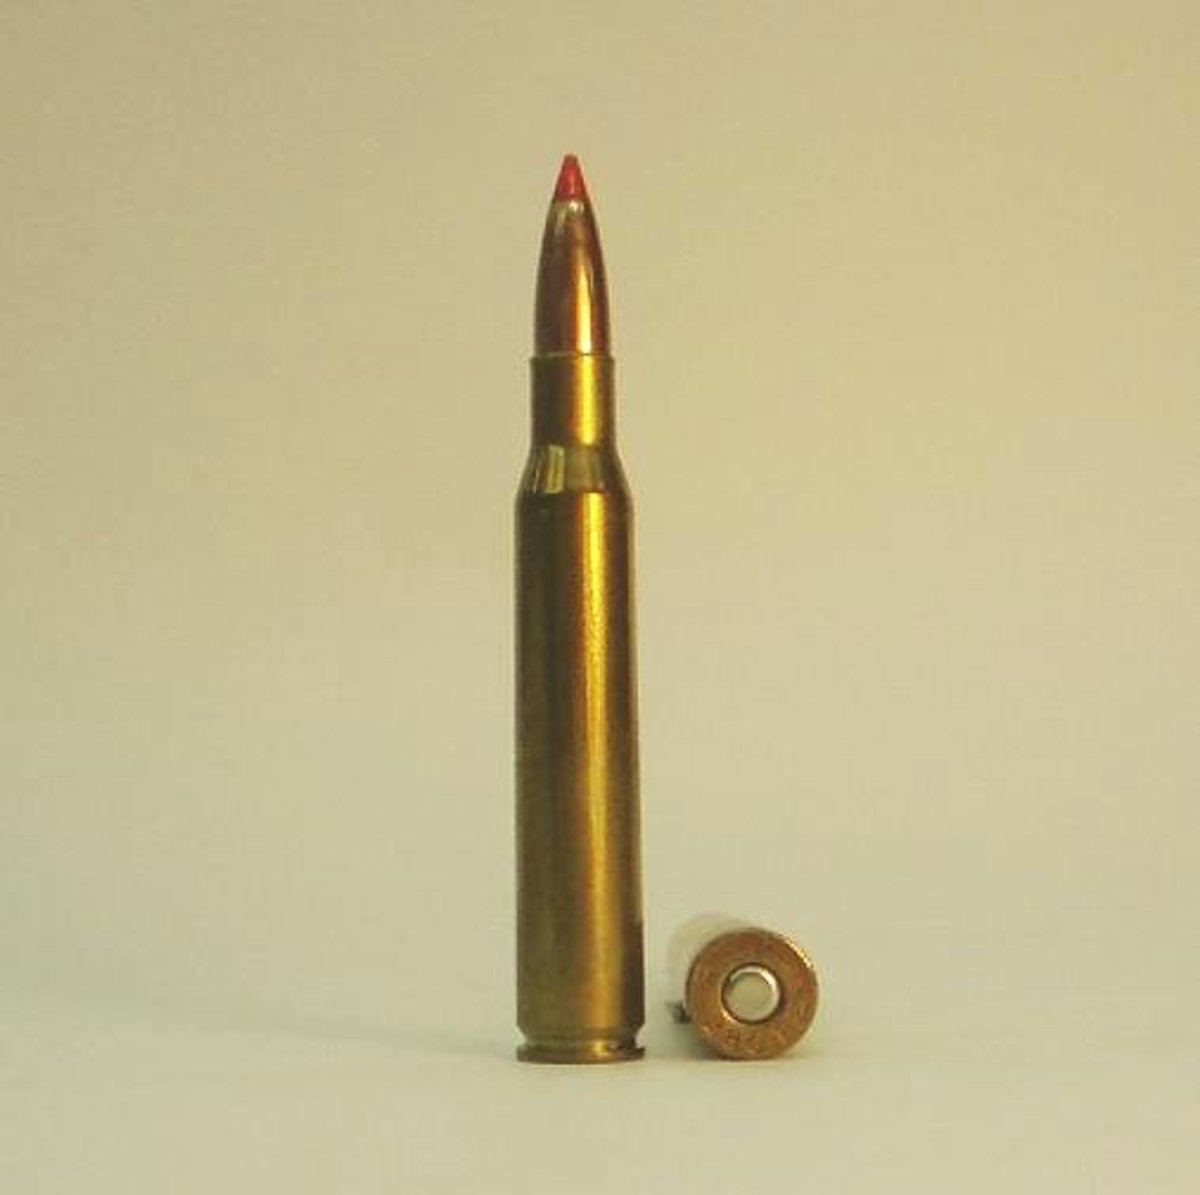 .280 Remington: The Rodney Dangerfield 7mm